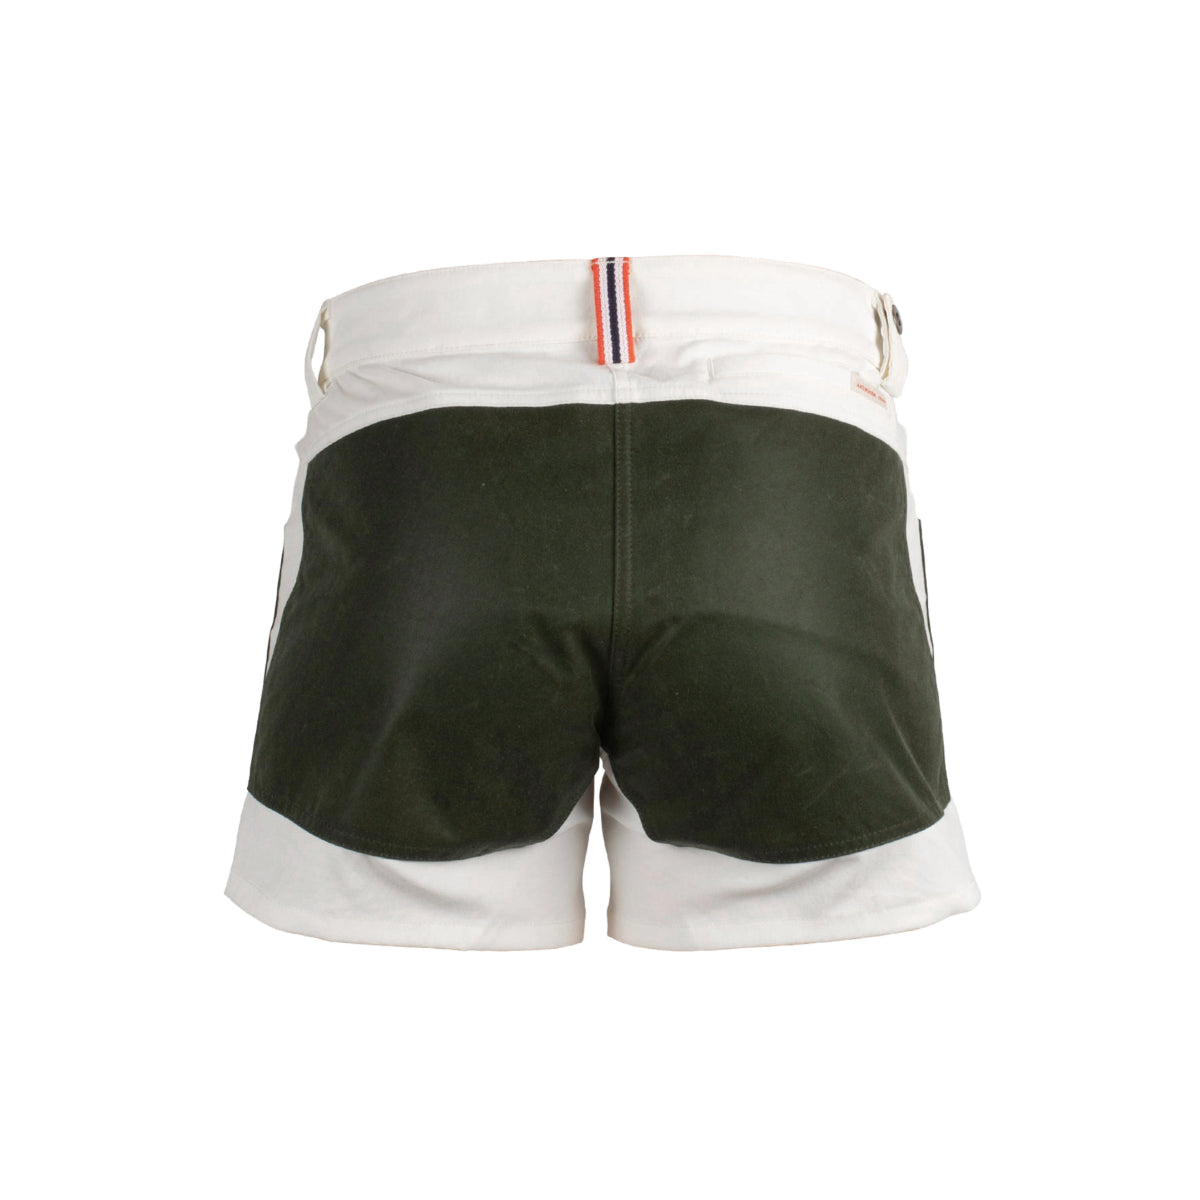 Amundsen Sports - Women's 5 Incher Field Shorts - Offwhite / Green